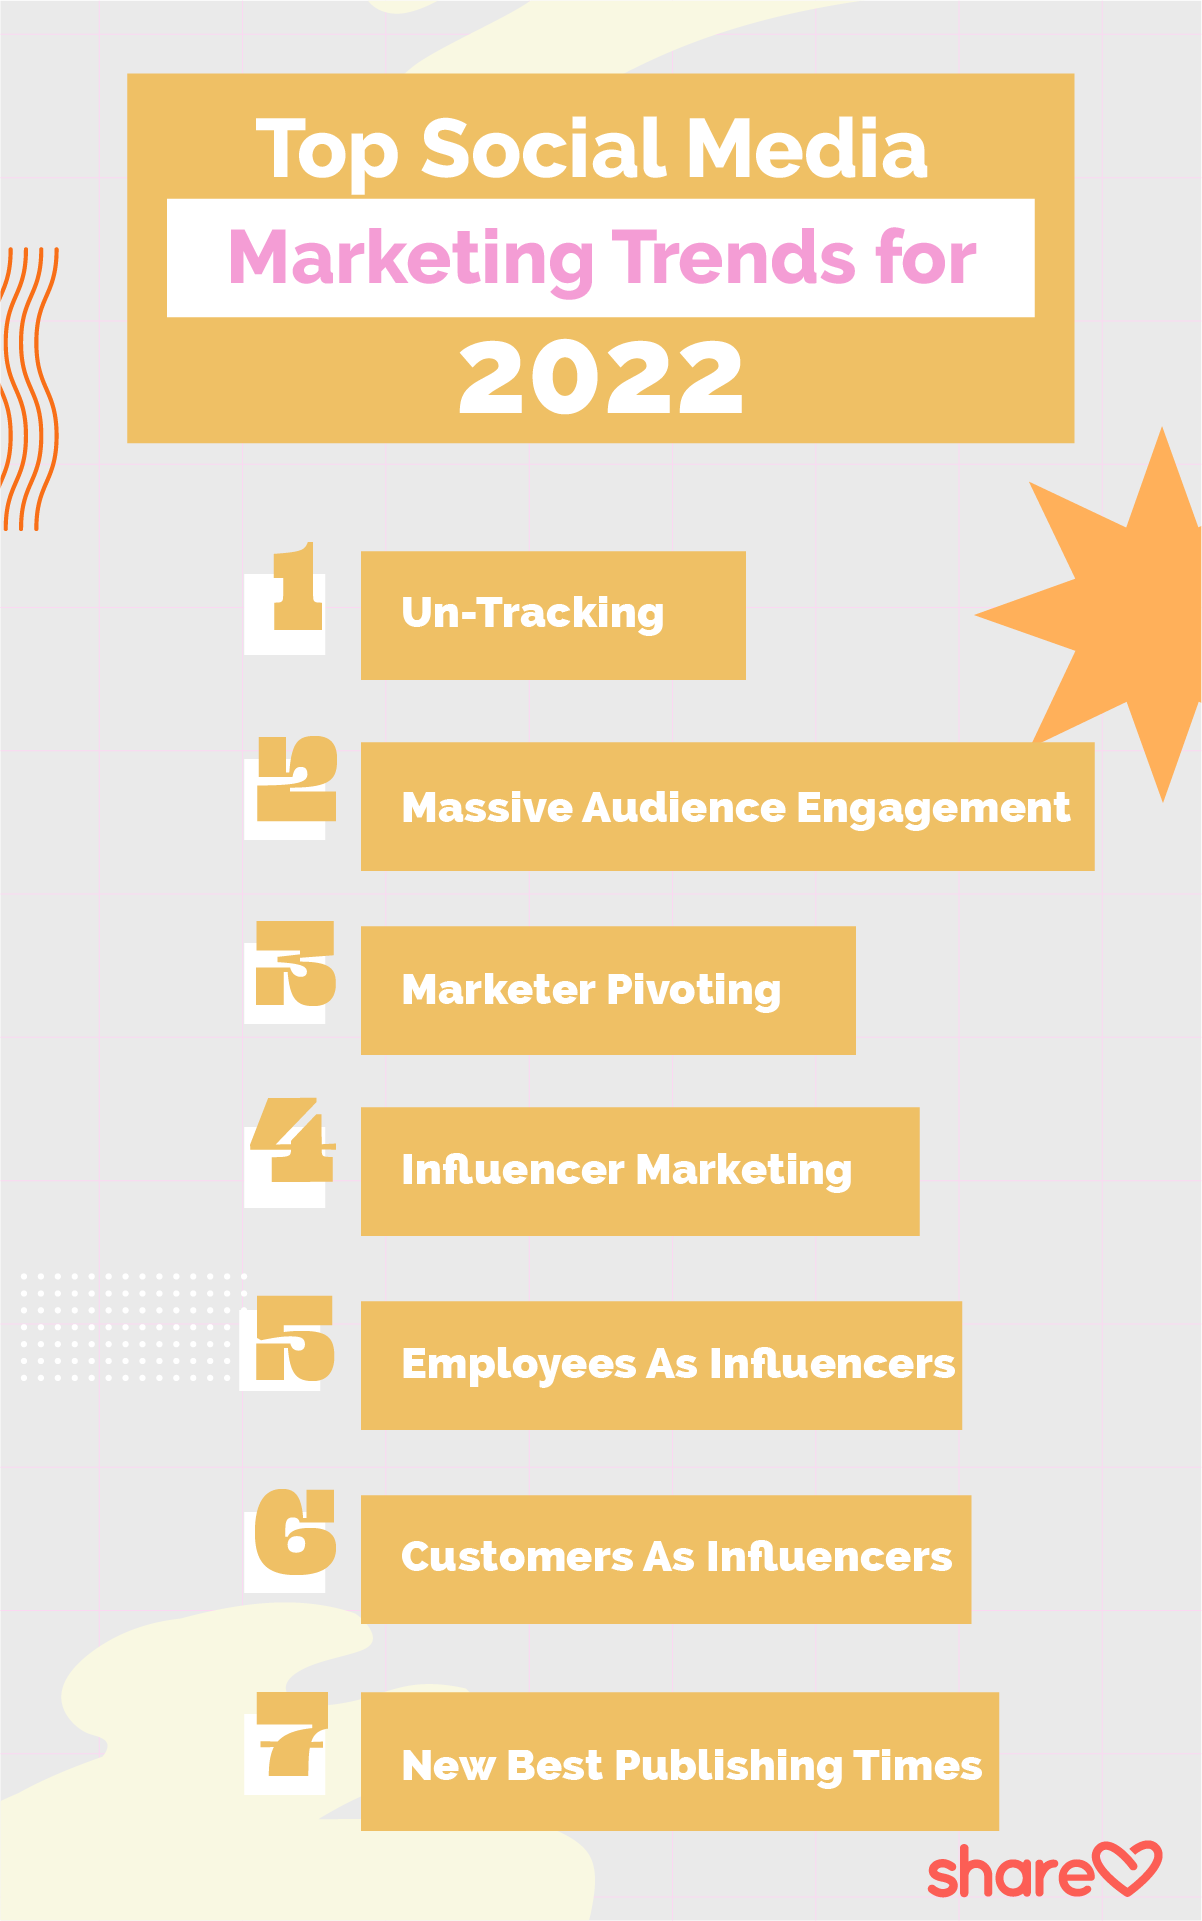 Top Social Media Marketing Trends for 2022